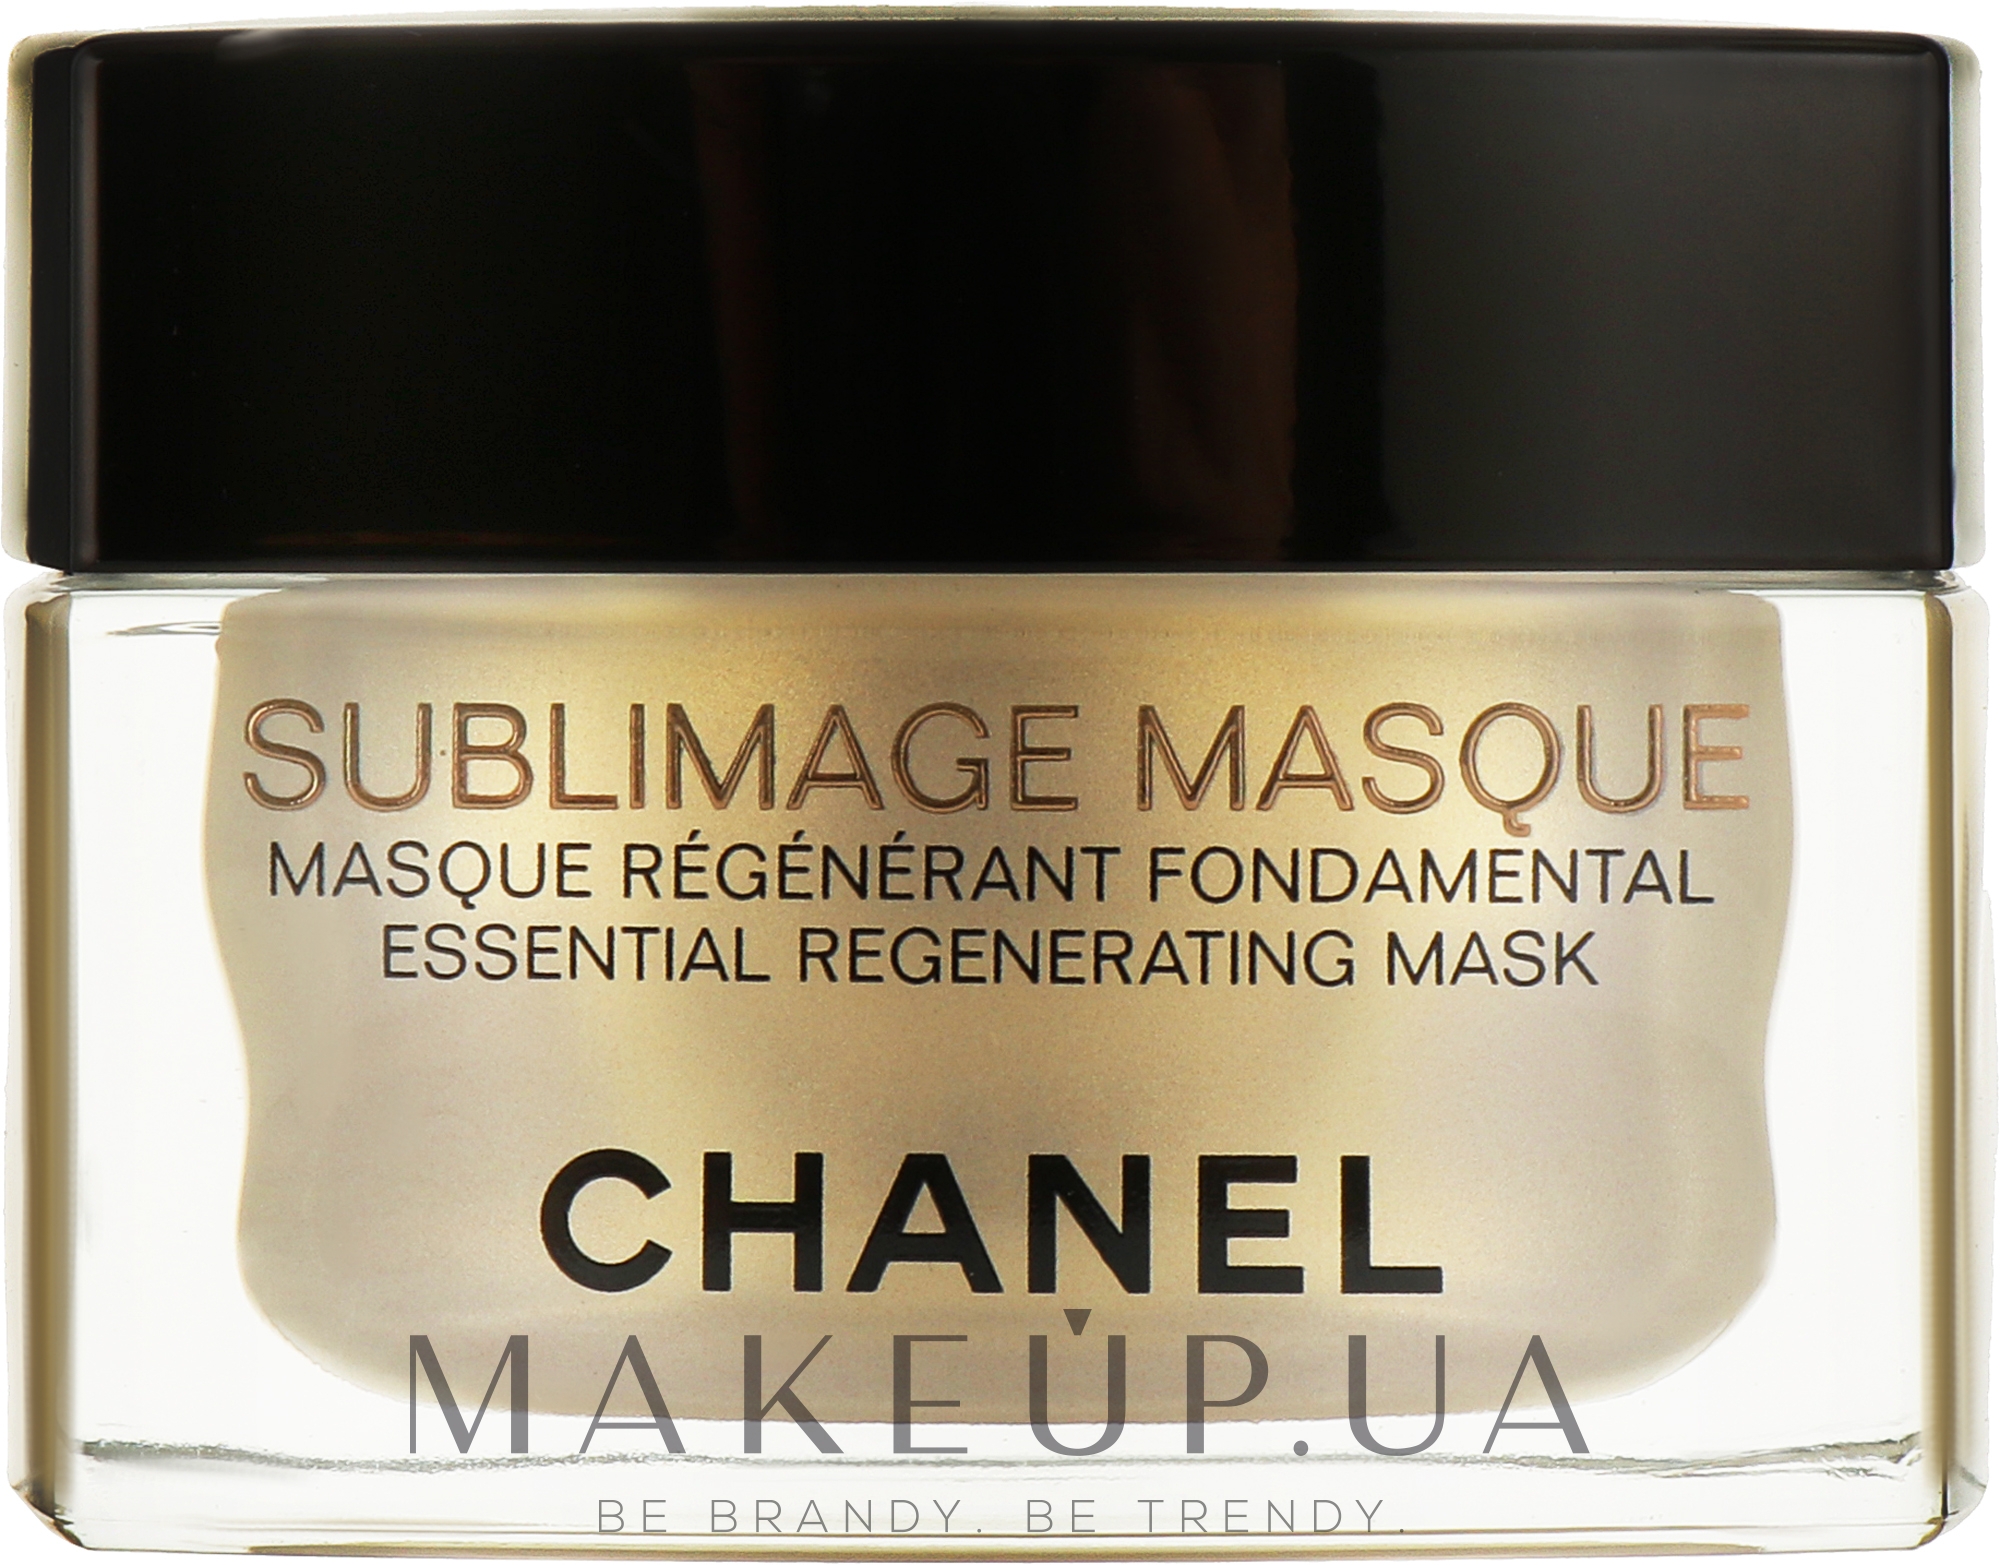 Sublime Regenerating Mask  Chanel Sublimage Masque  MAKEUP